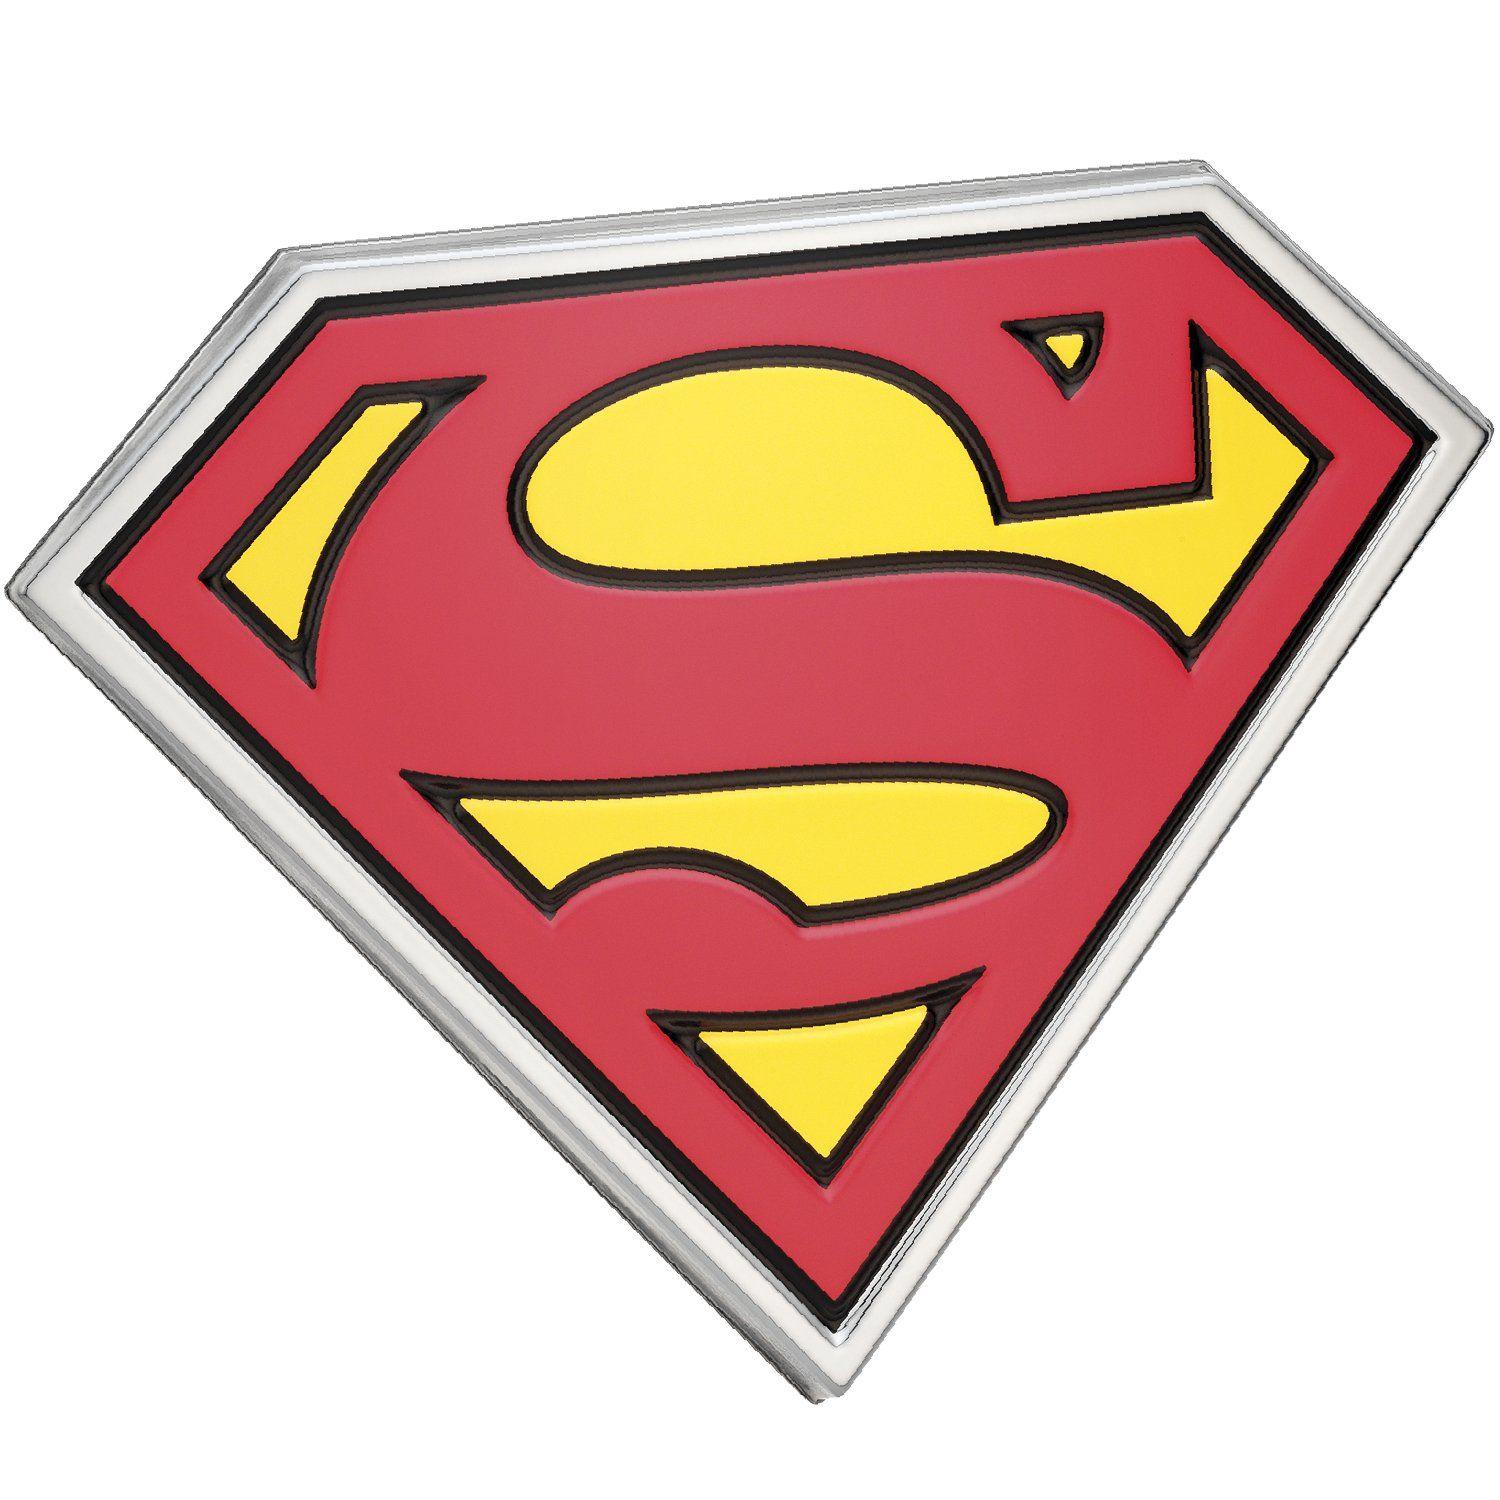 Red Chrome Logo - Fan Emblems Superman Logo 3D Car Emblem Black/Red/Yellow/Chrome, DC Comics  Automotive Sticker Decal Badge Flexes to Fully Adhere to Cars, Trucks, ...